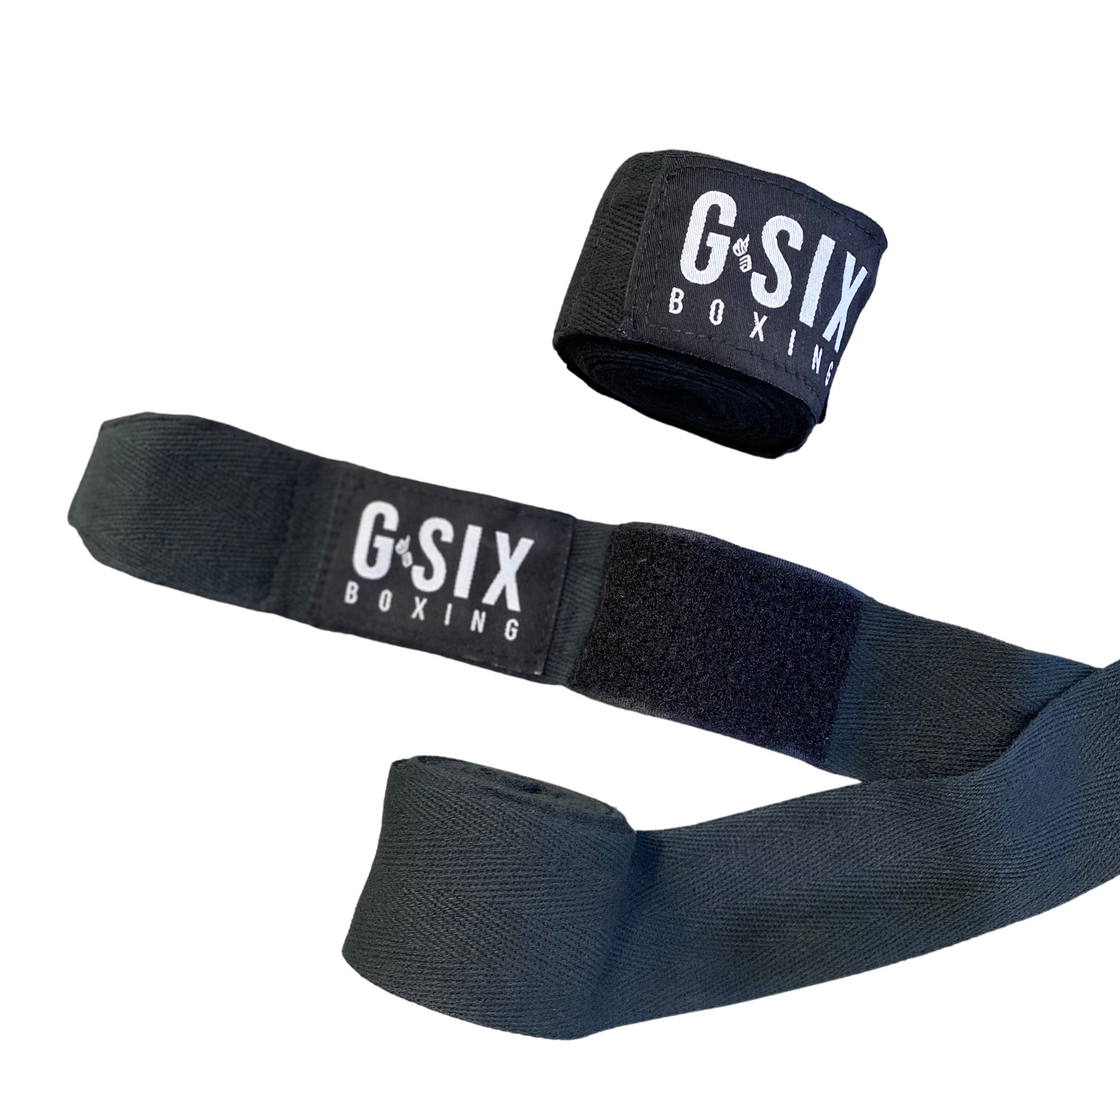 G-Six Boxing Hand Wraps - White logo